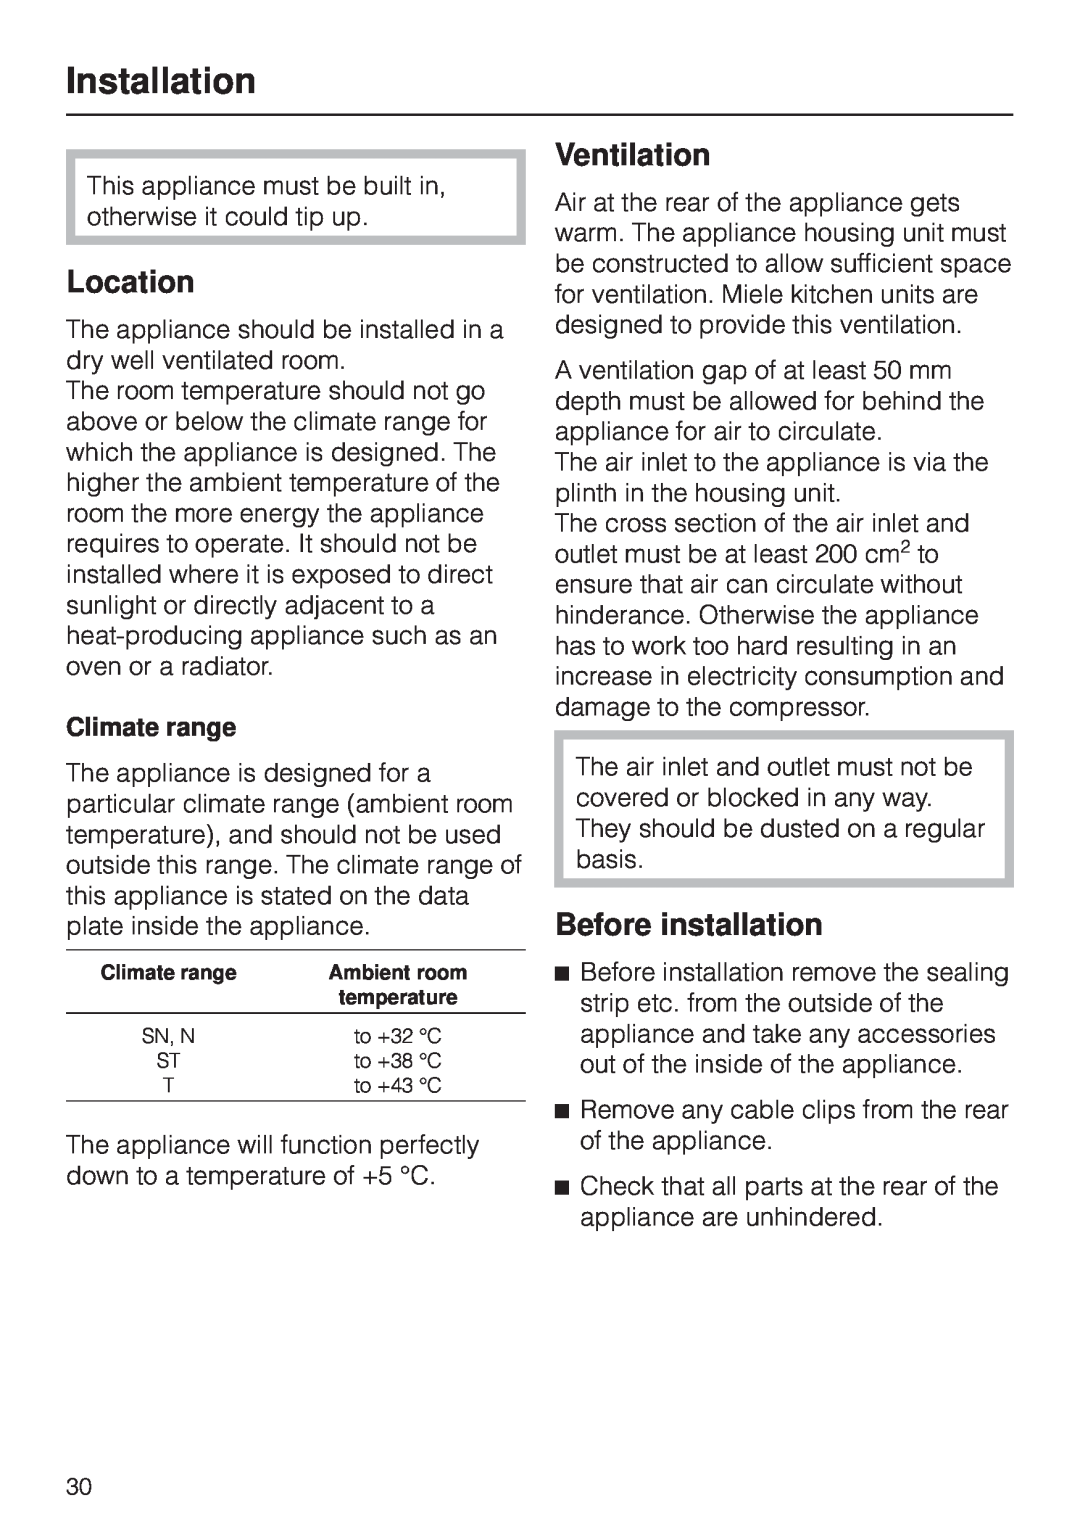 Miele F 311 i-6 installation instructions Installation, Location, Ventilation, Before installation, Climate range 